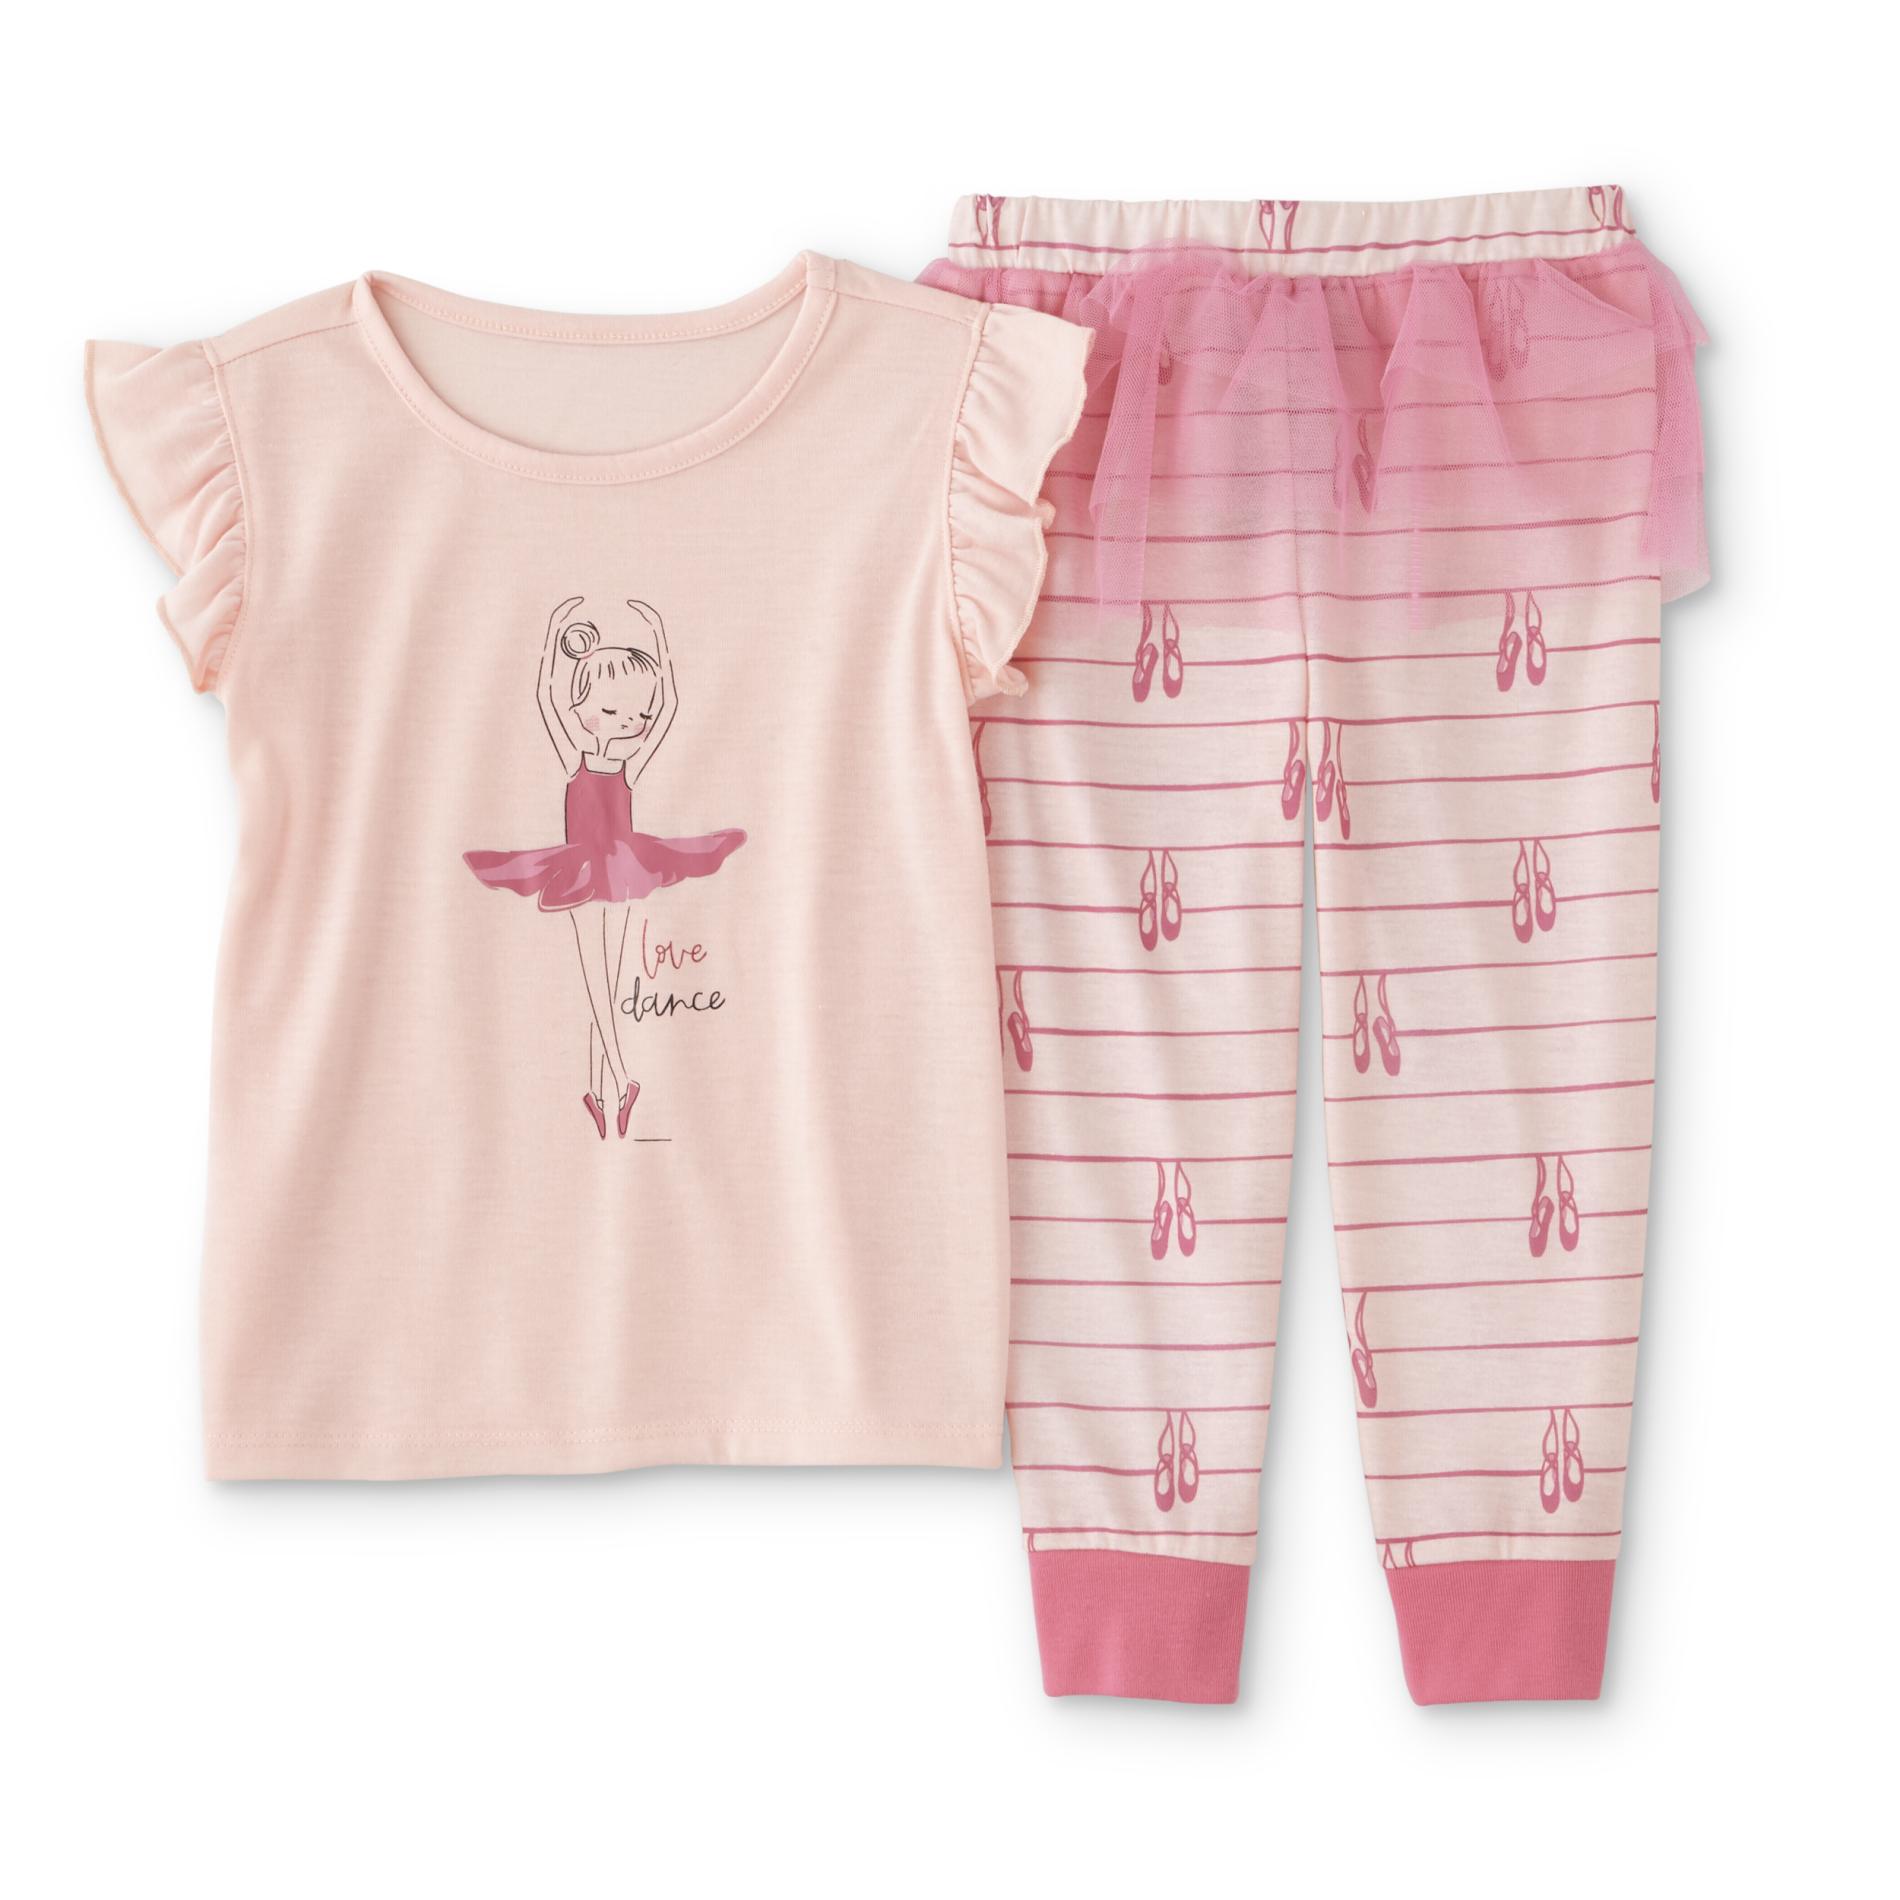 Joe Boxer Infant & Toddler Girls' Pajama Top & Pants - Ballerina